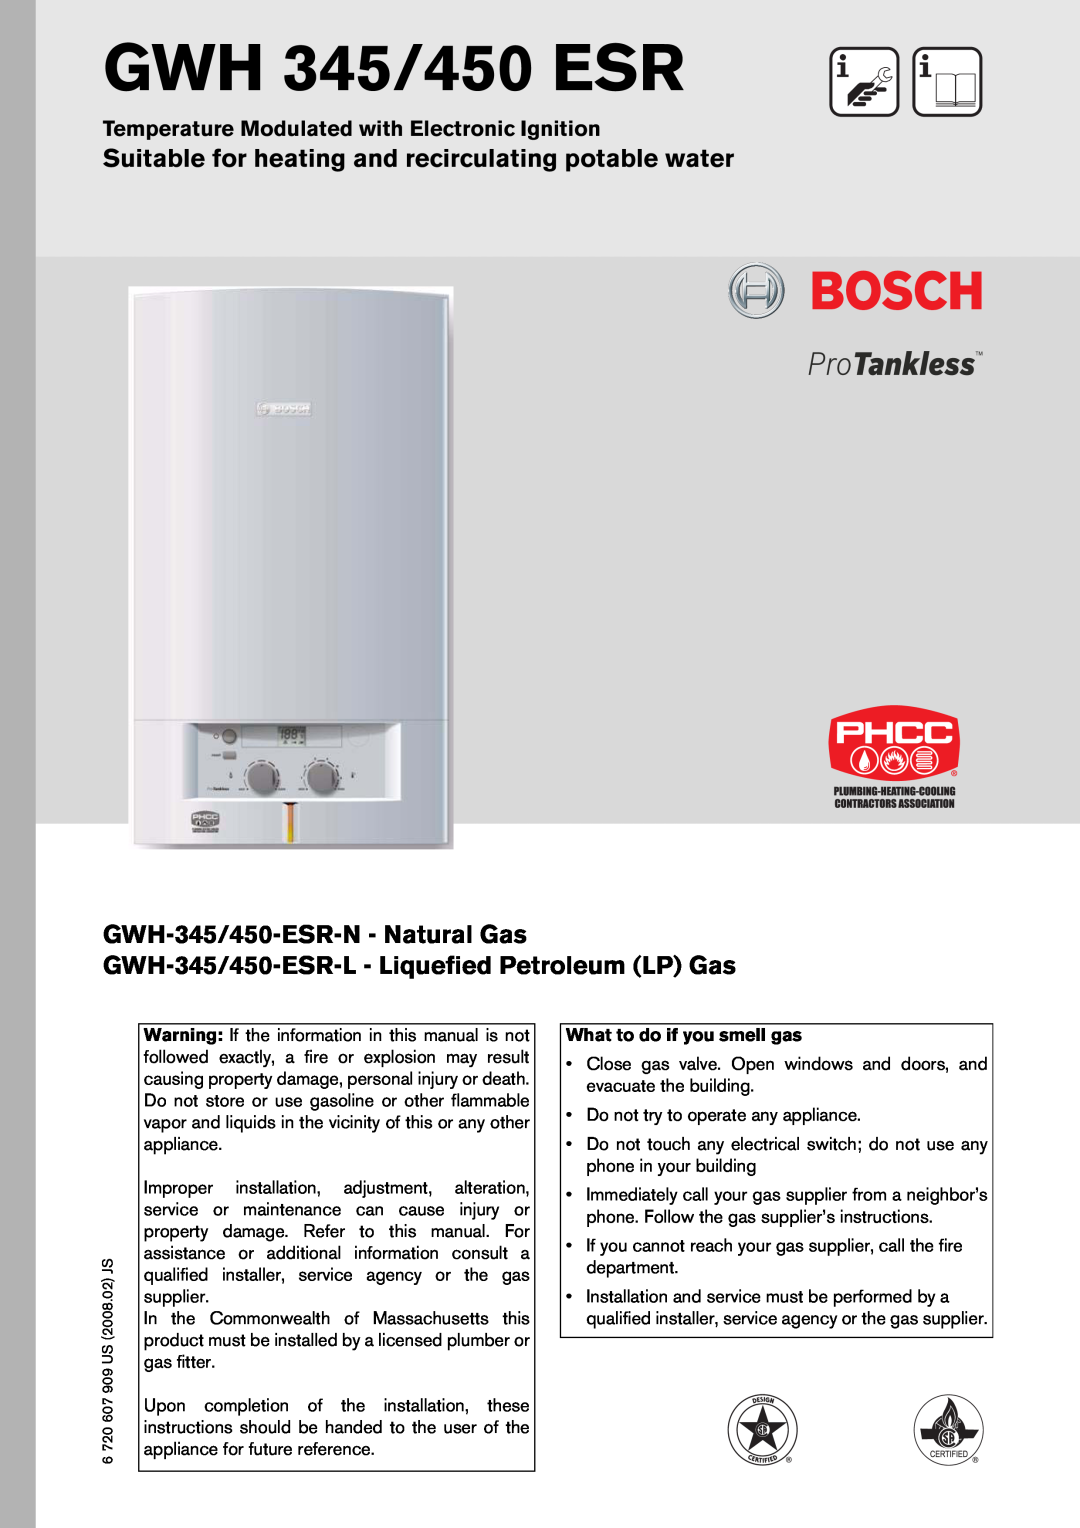 Bosch Appliances GWH-345/450-ESR-N manual Suitable for heating and recirculating potable water, GWH 345/450 ESR 